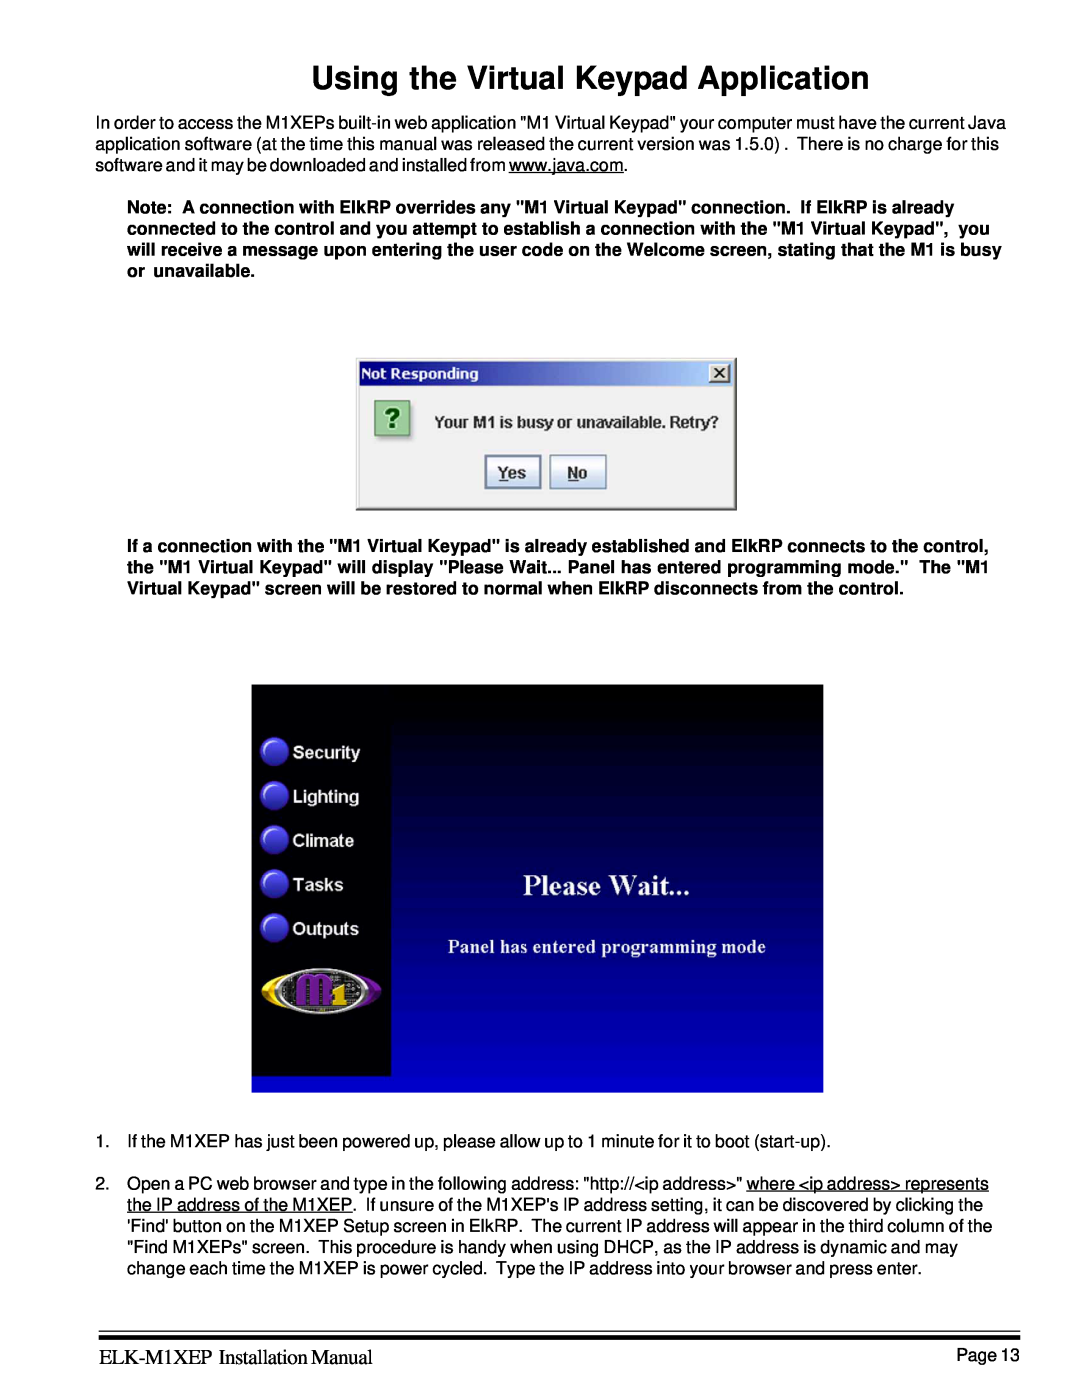 Elk installation manual Using the Virtual Keypad Application, ELK-M1XEP Installation Manual 